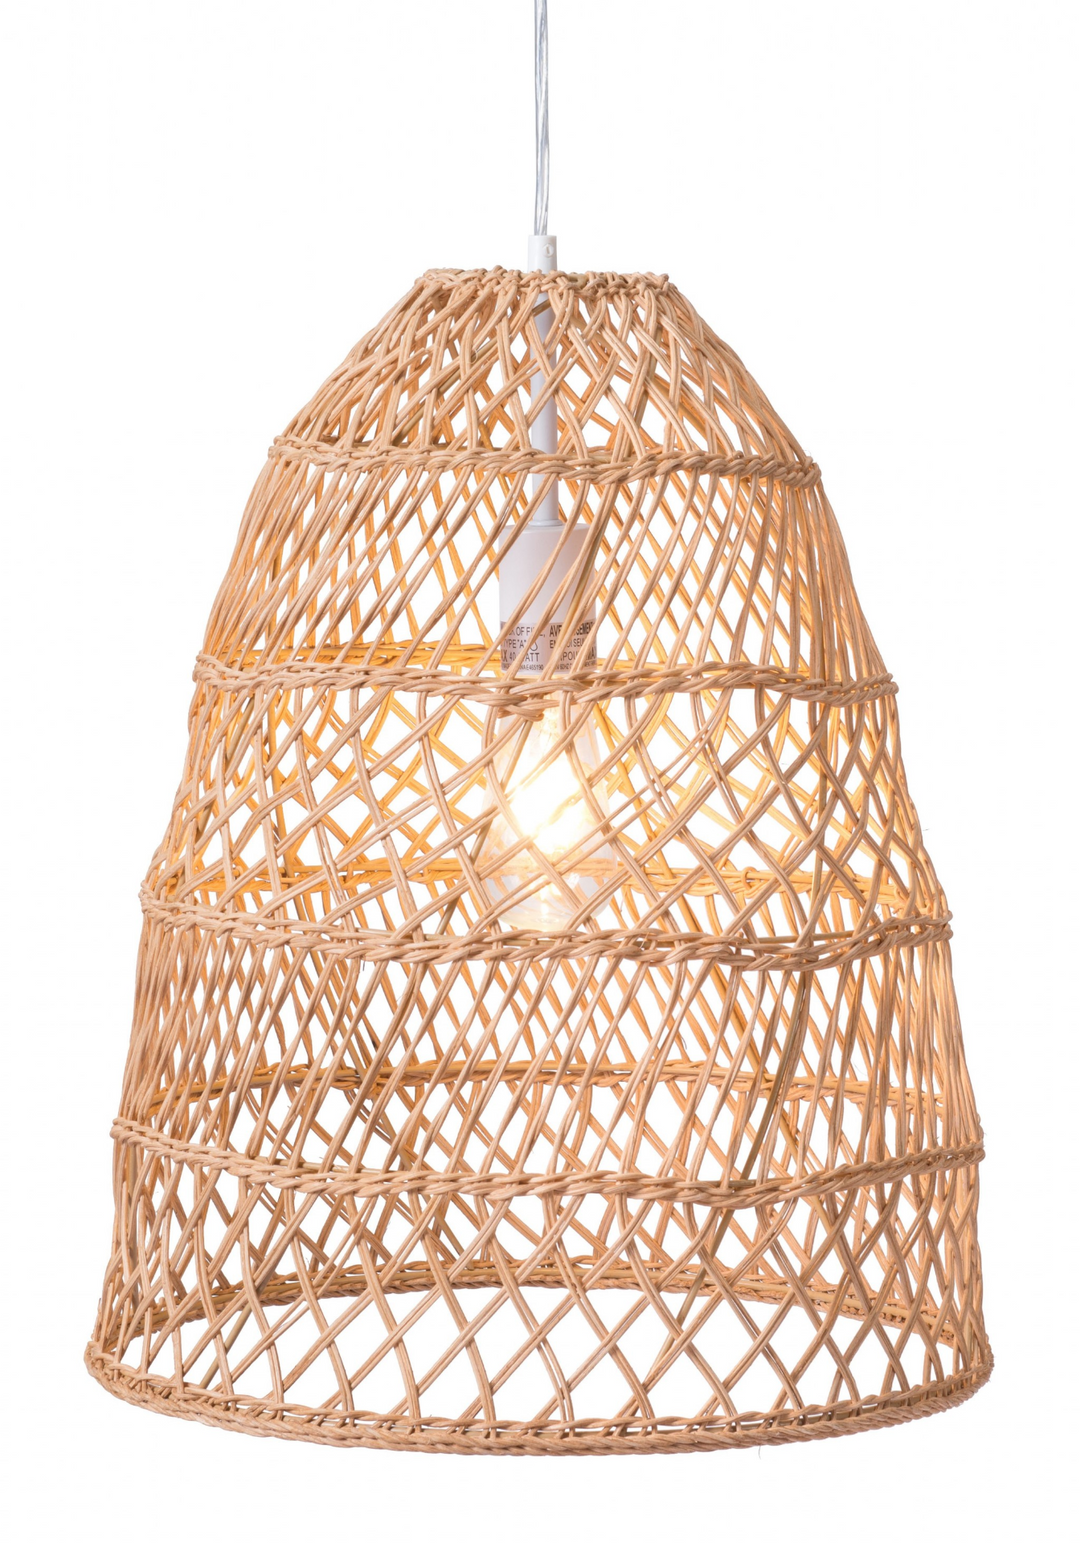 Boho Aesthetic "Natural Basket Ceiling Lamp" | Biophilic Design Airbnb Decor Furniture 